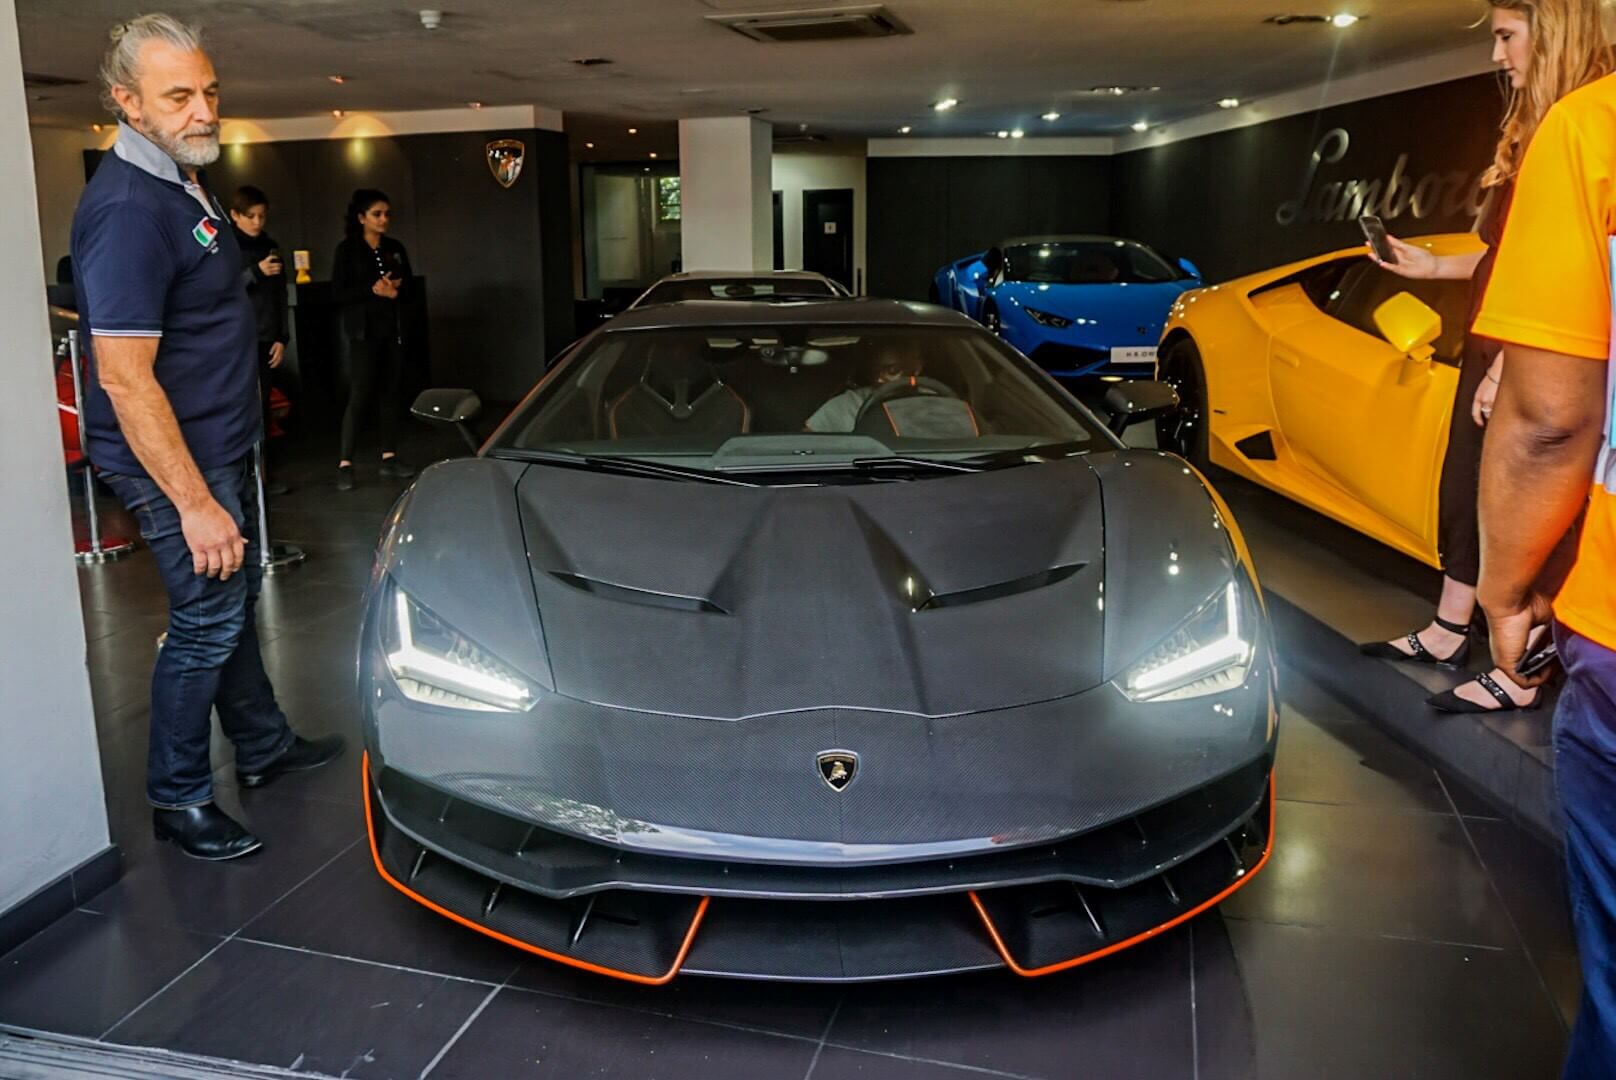 Lamborghini Centenario London